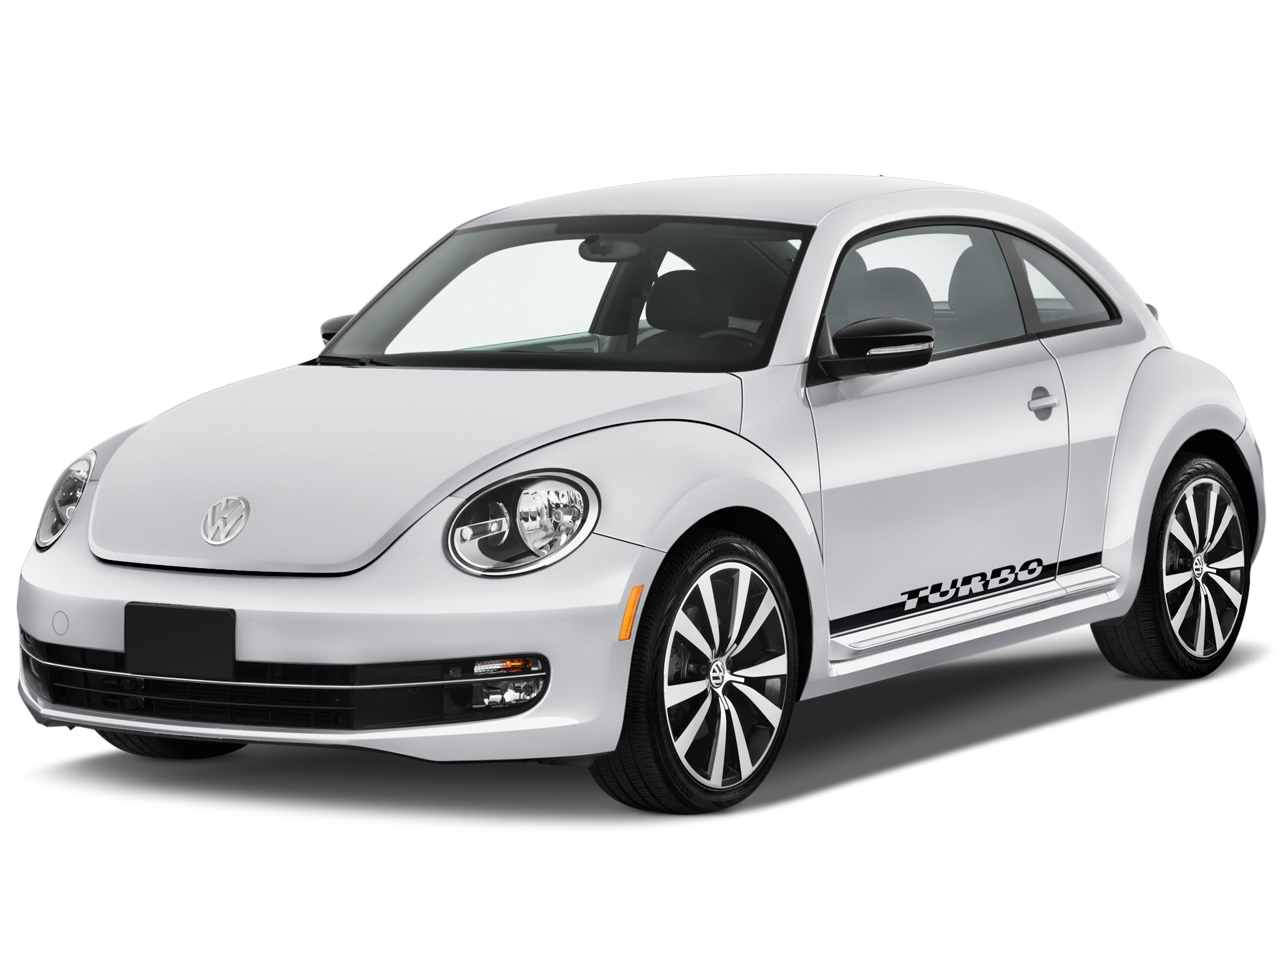 White Volkswagen Beetle Png Car Image - Volkswagen, Transparent background PNG HD thumbnail